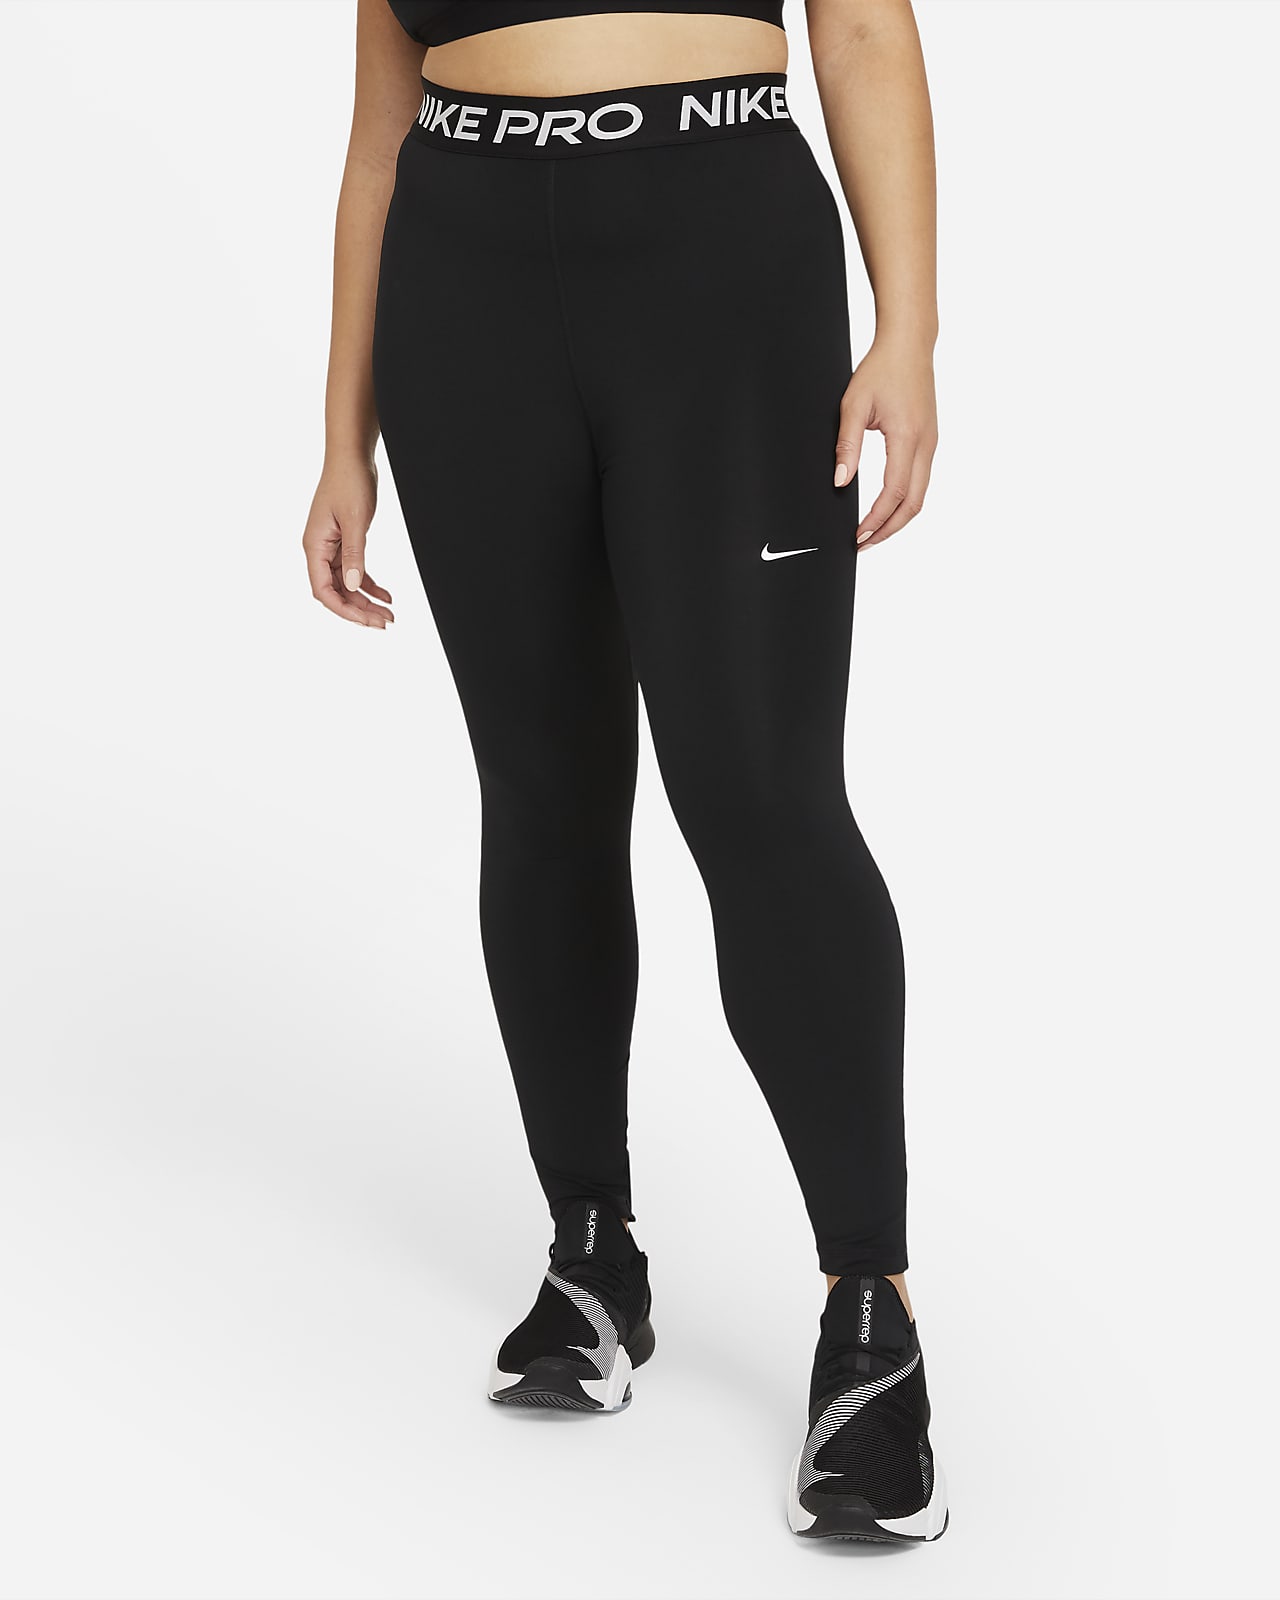 Pro Women's Leggings (Plus Size). Nike